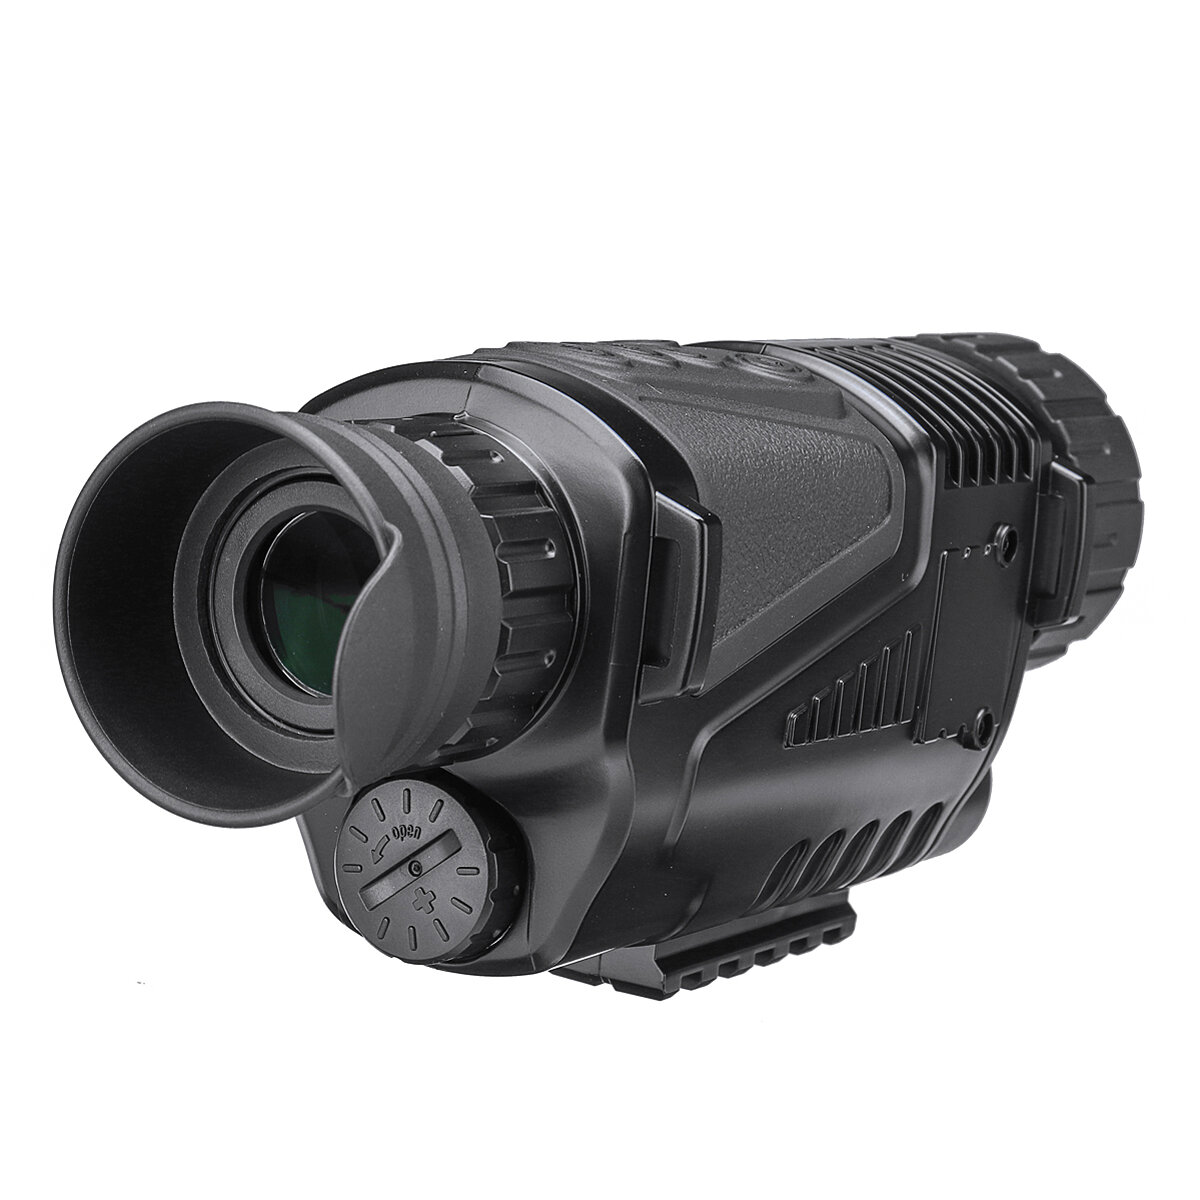 HD-Infrarot-Nachtsichtgerät Dual-Use-Monokularkamera 5X Digitalzoom-Teleskop für Outdoor-Reisen und Jagd